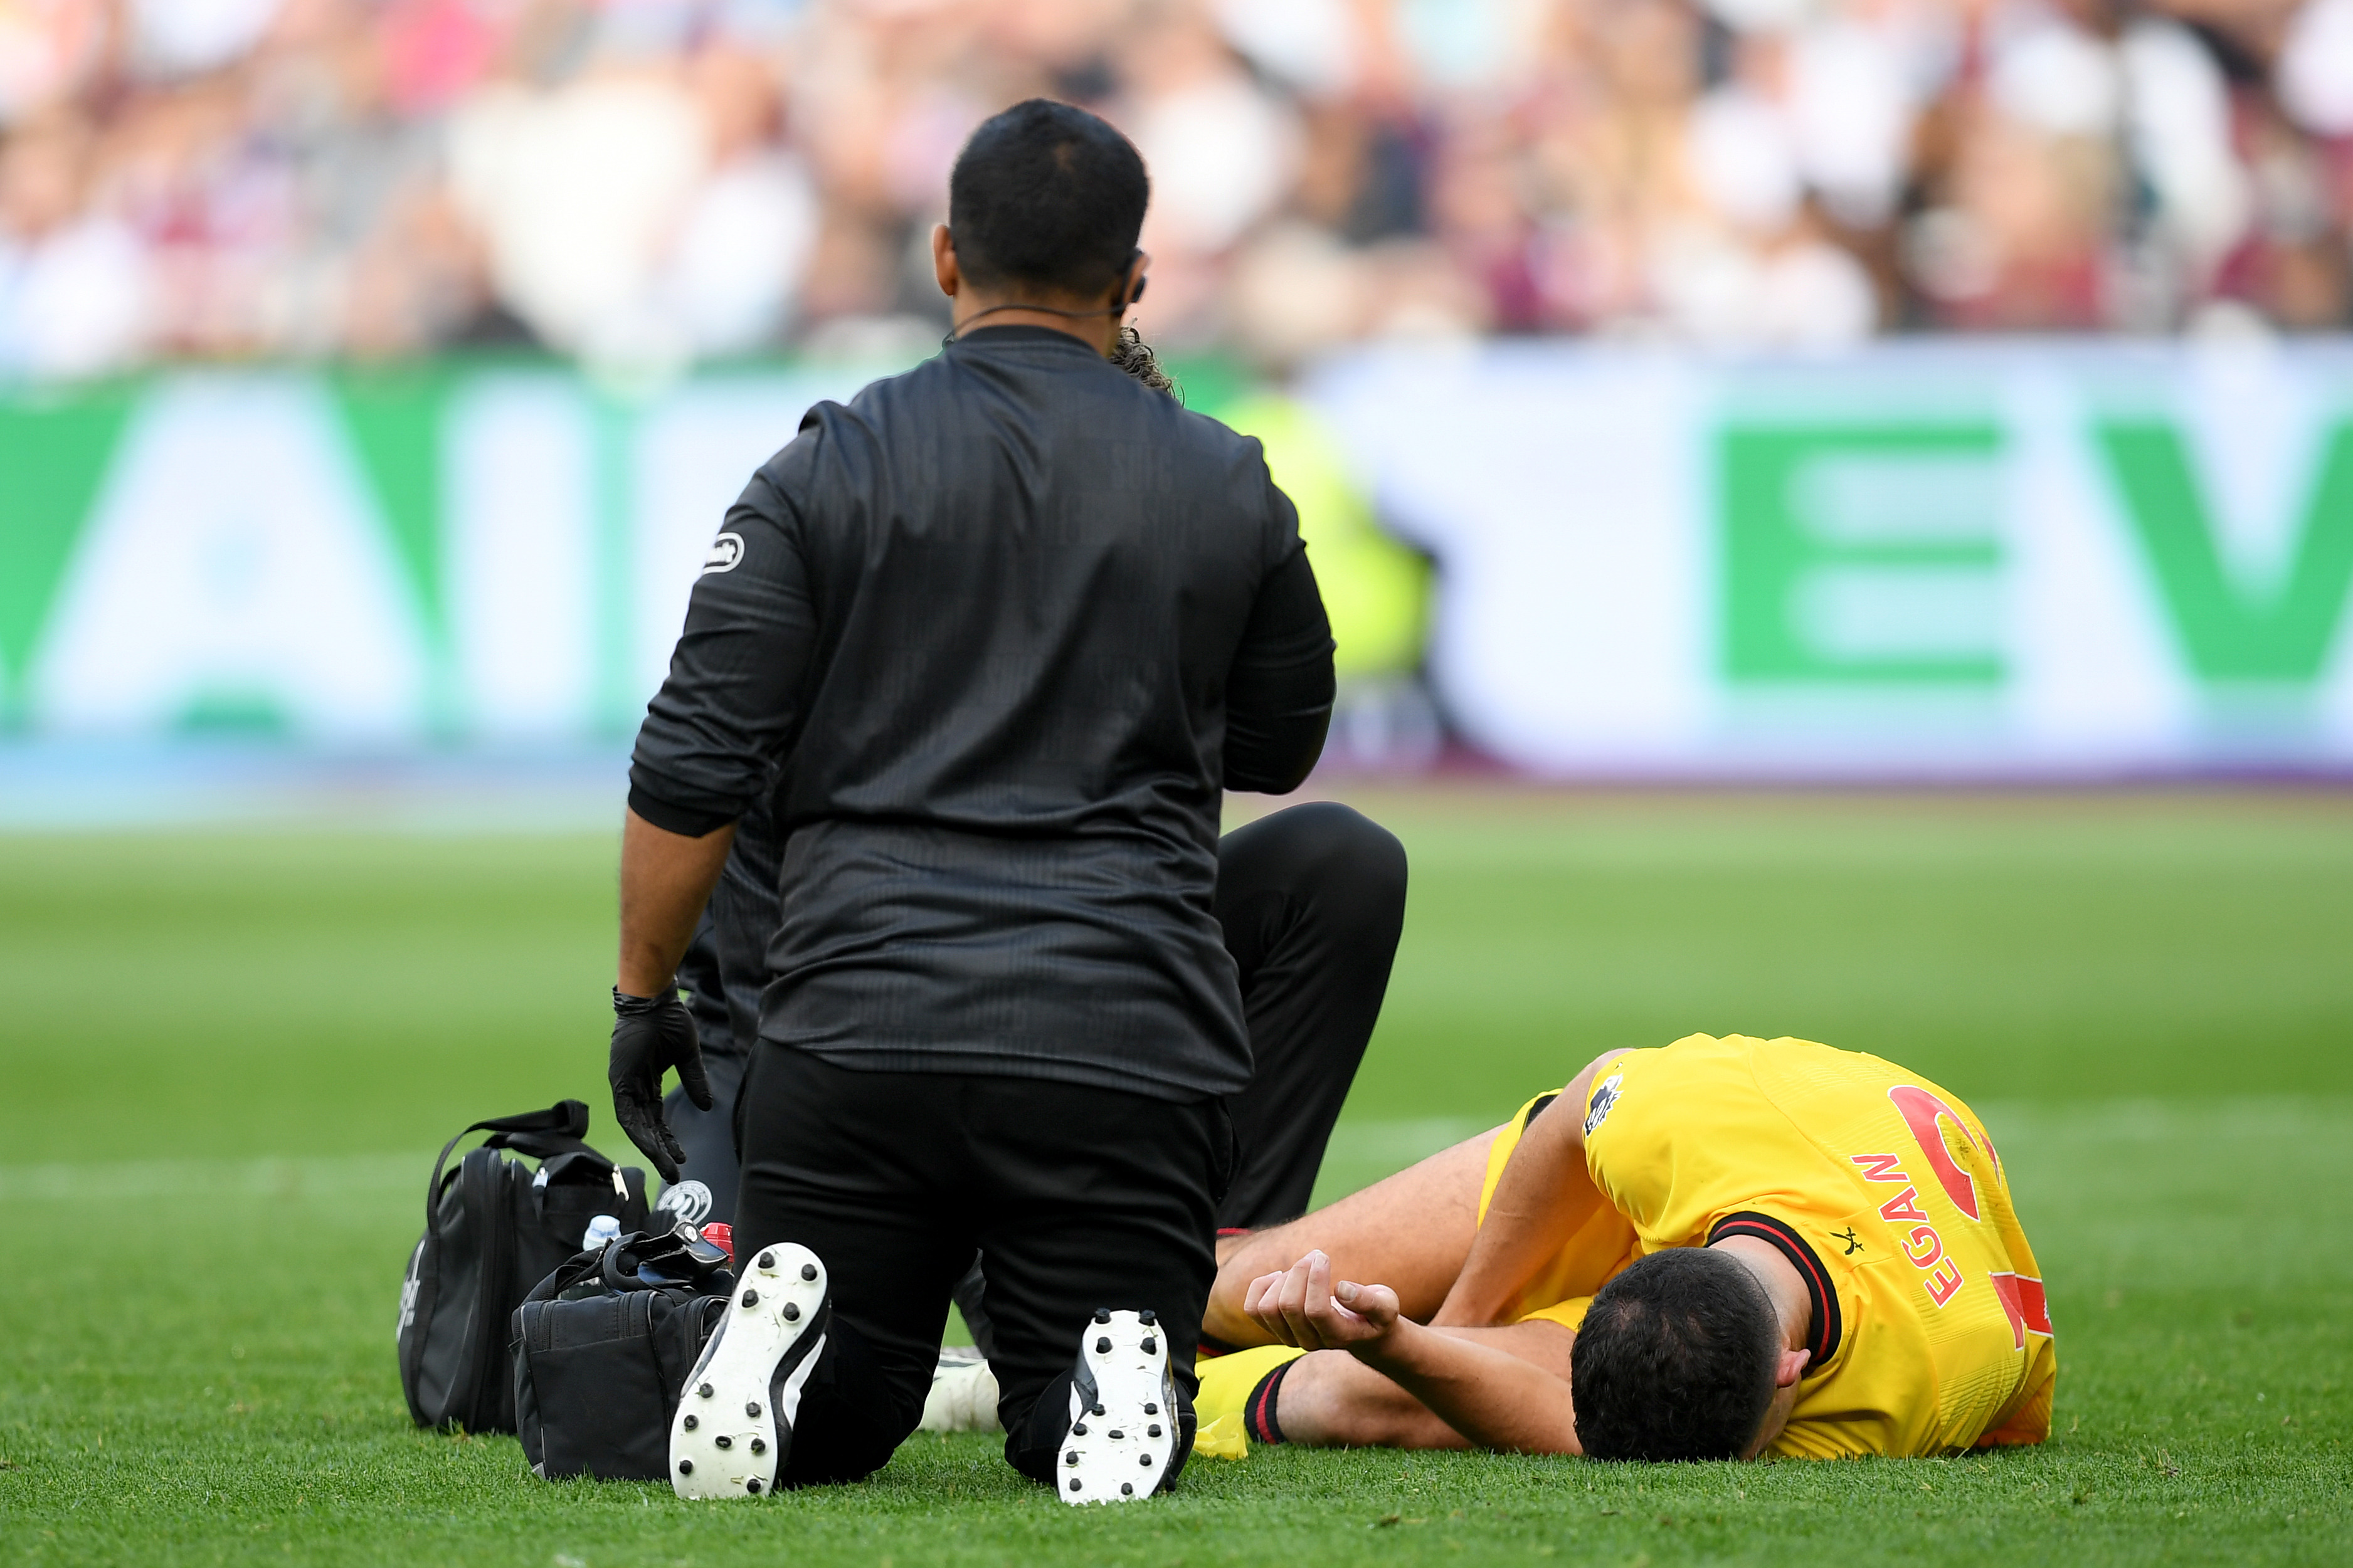 Sheffield United defender John Egan receiving treatment for an injury against West Ham.